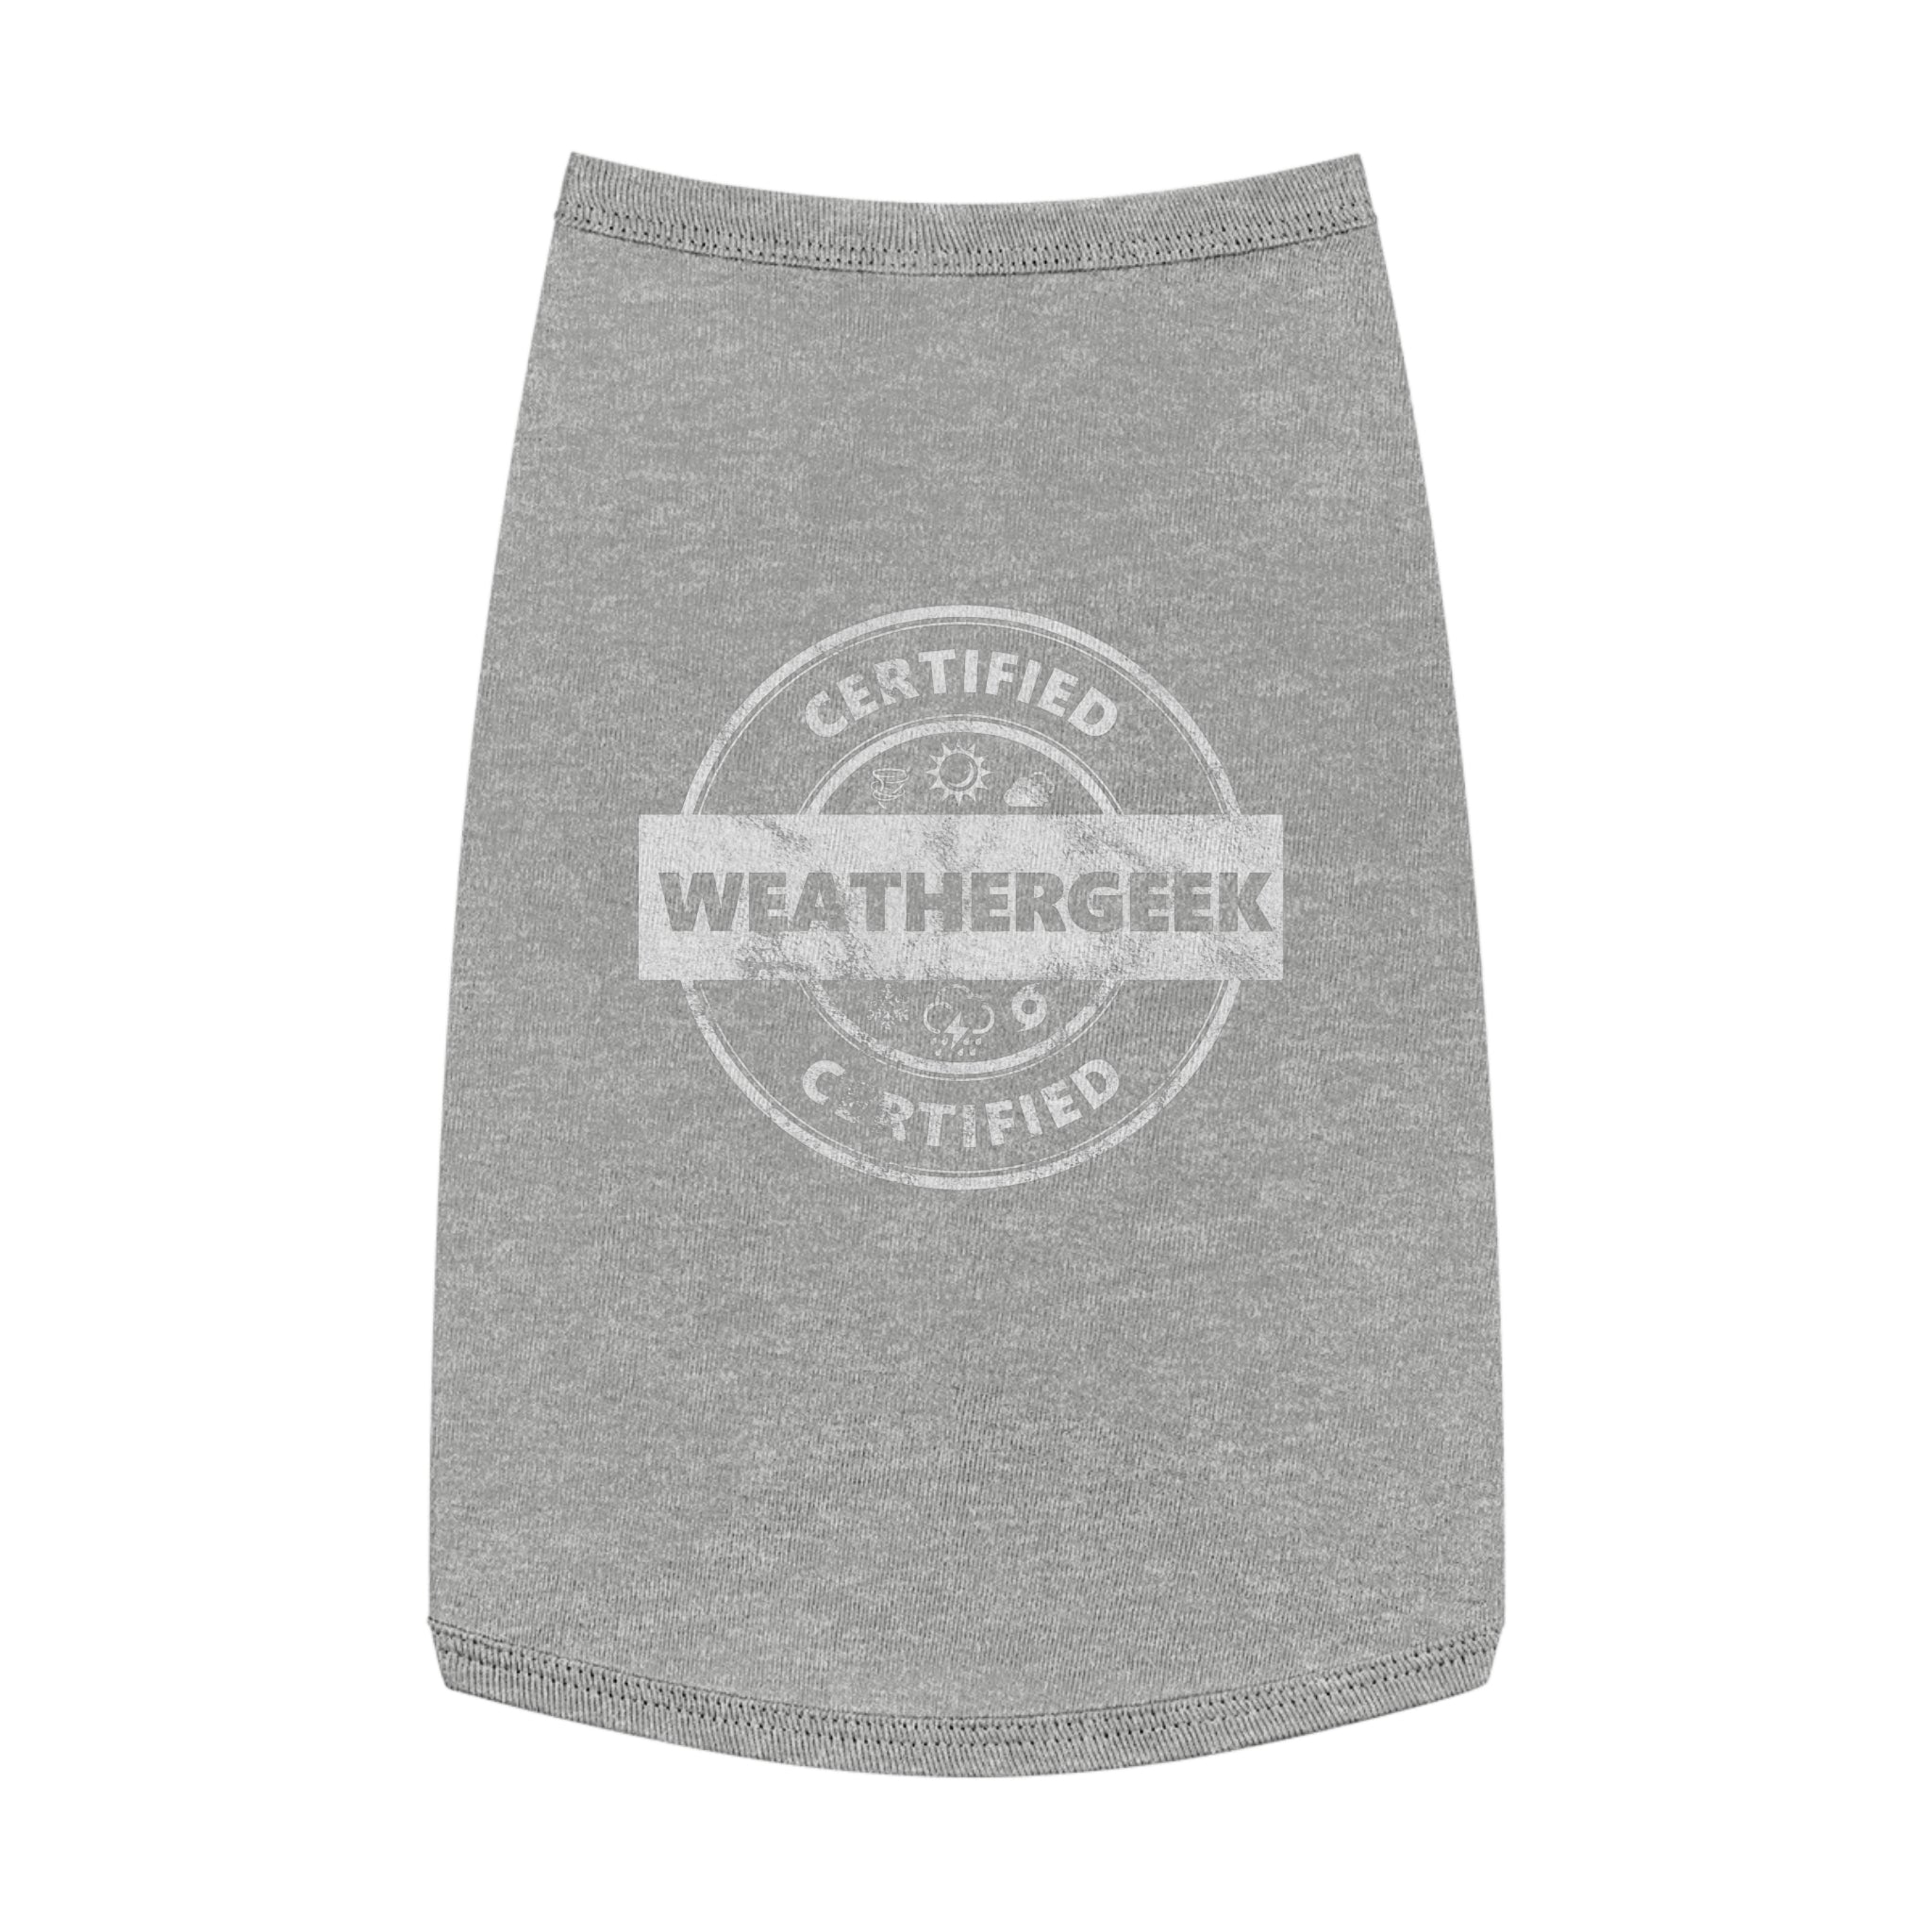 Certified Weathergeek Pet Shirt 